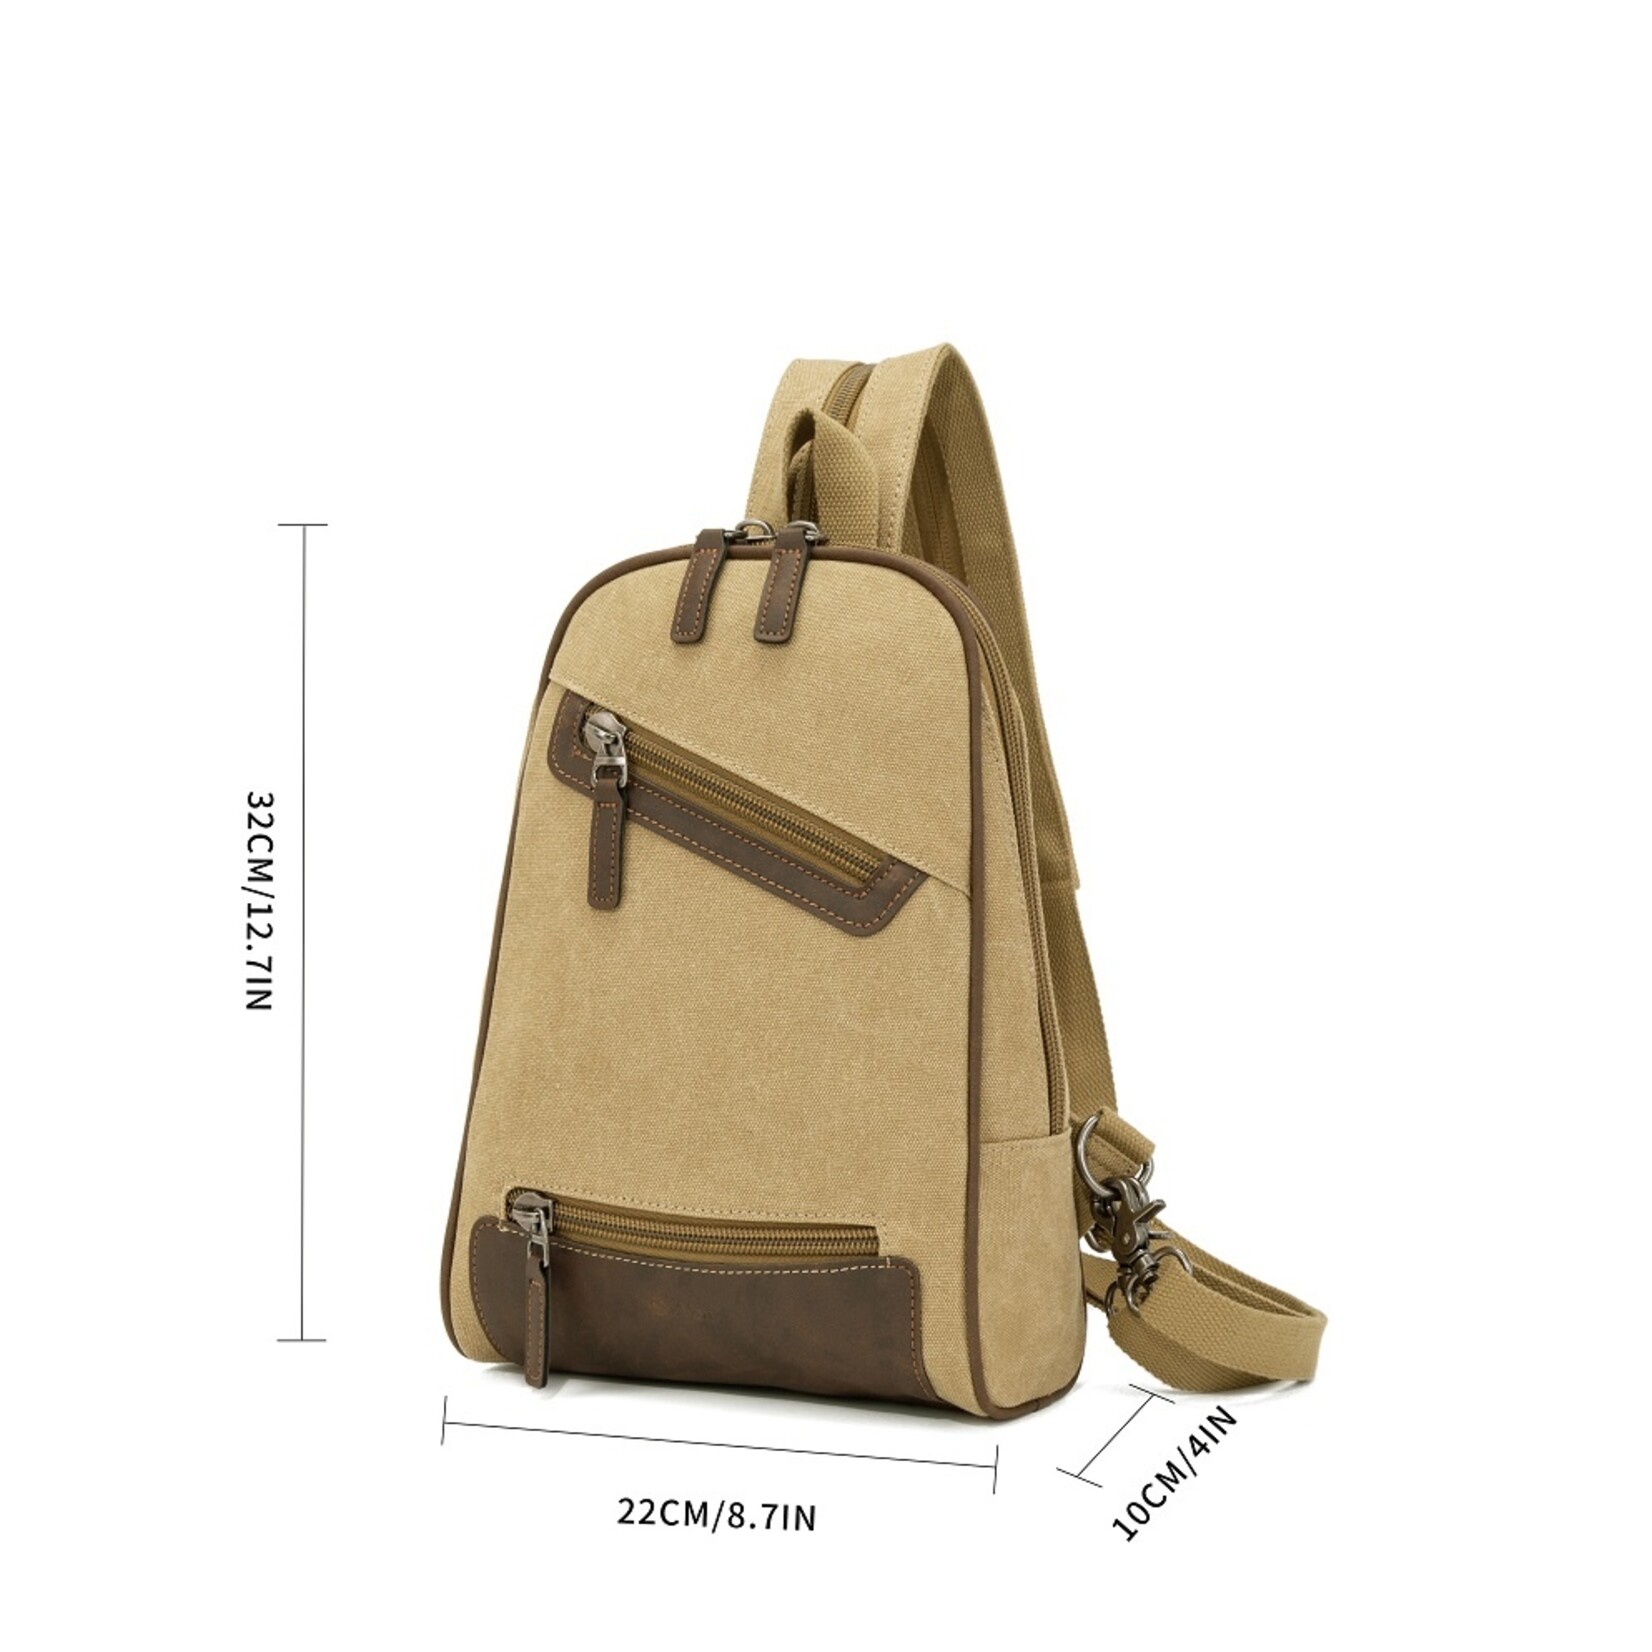 Multifunctional Canvas Backpack Sling Bag - Green